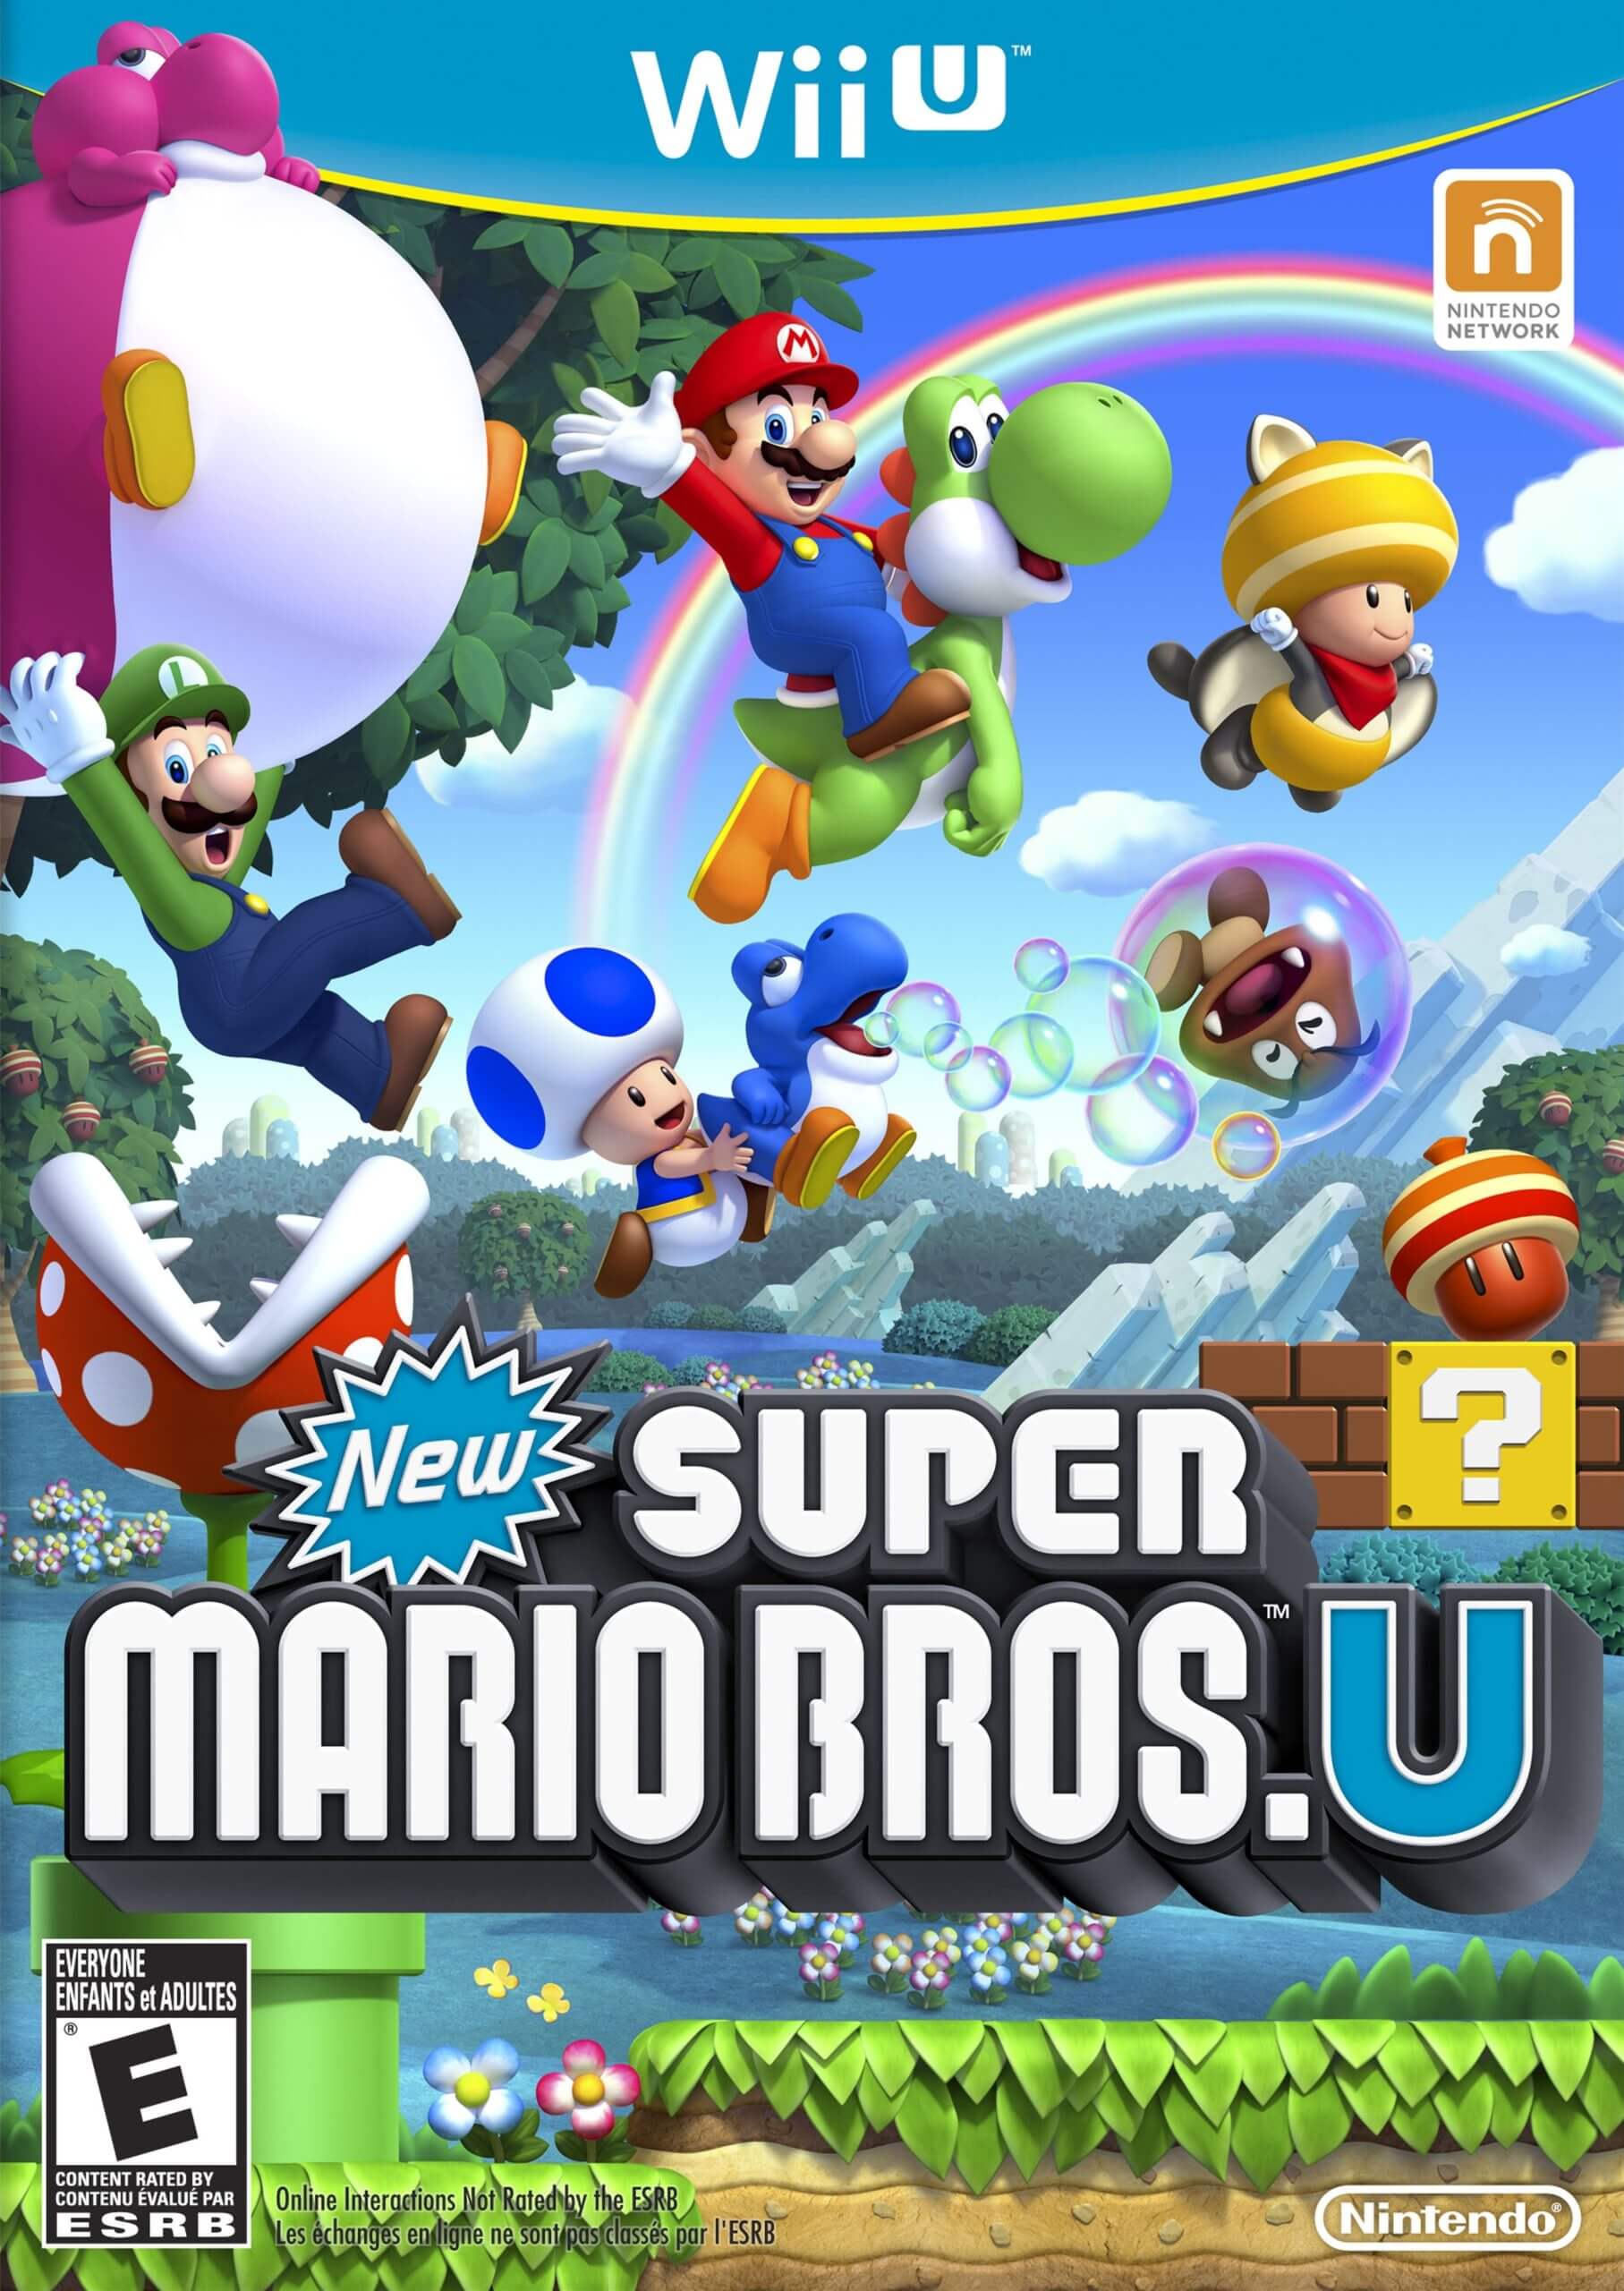 ☘️ [VERIFIED] New Super Mario Bros U Download Size 1589309909-b3ed33bd-3fca-4064-b129-824f826977d1-scaled